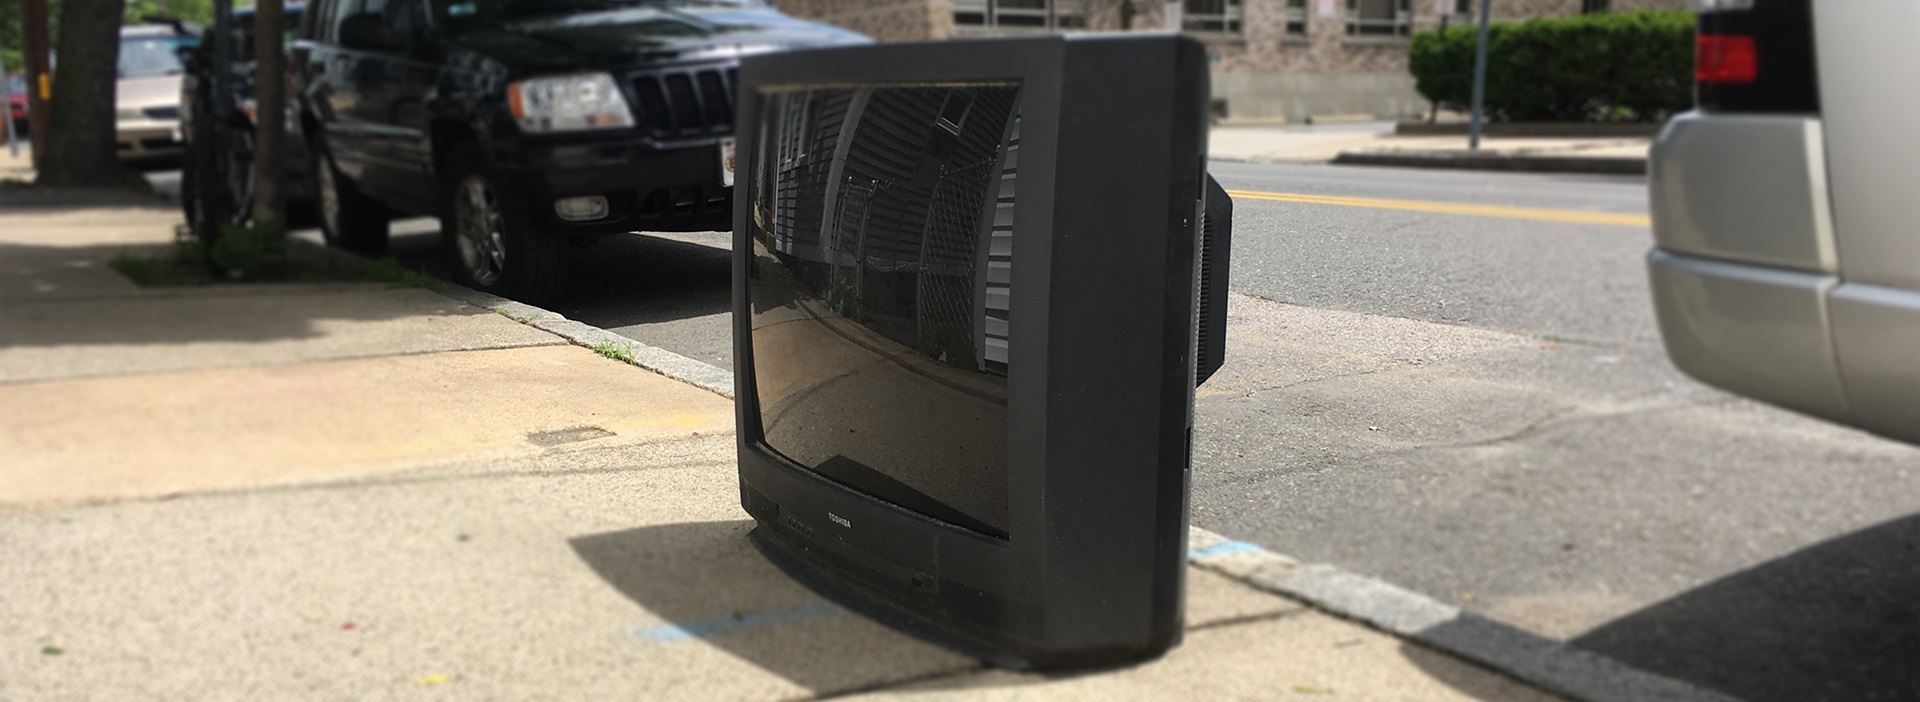 Large TV on a sidewalk